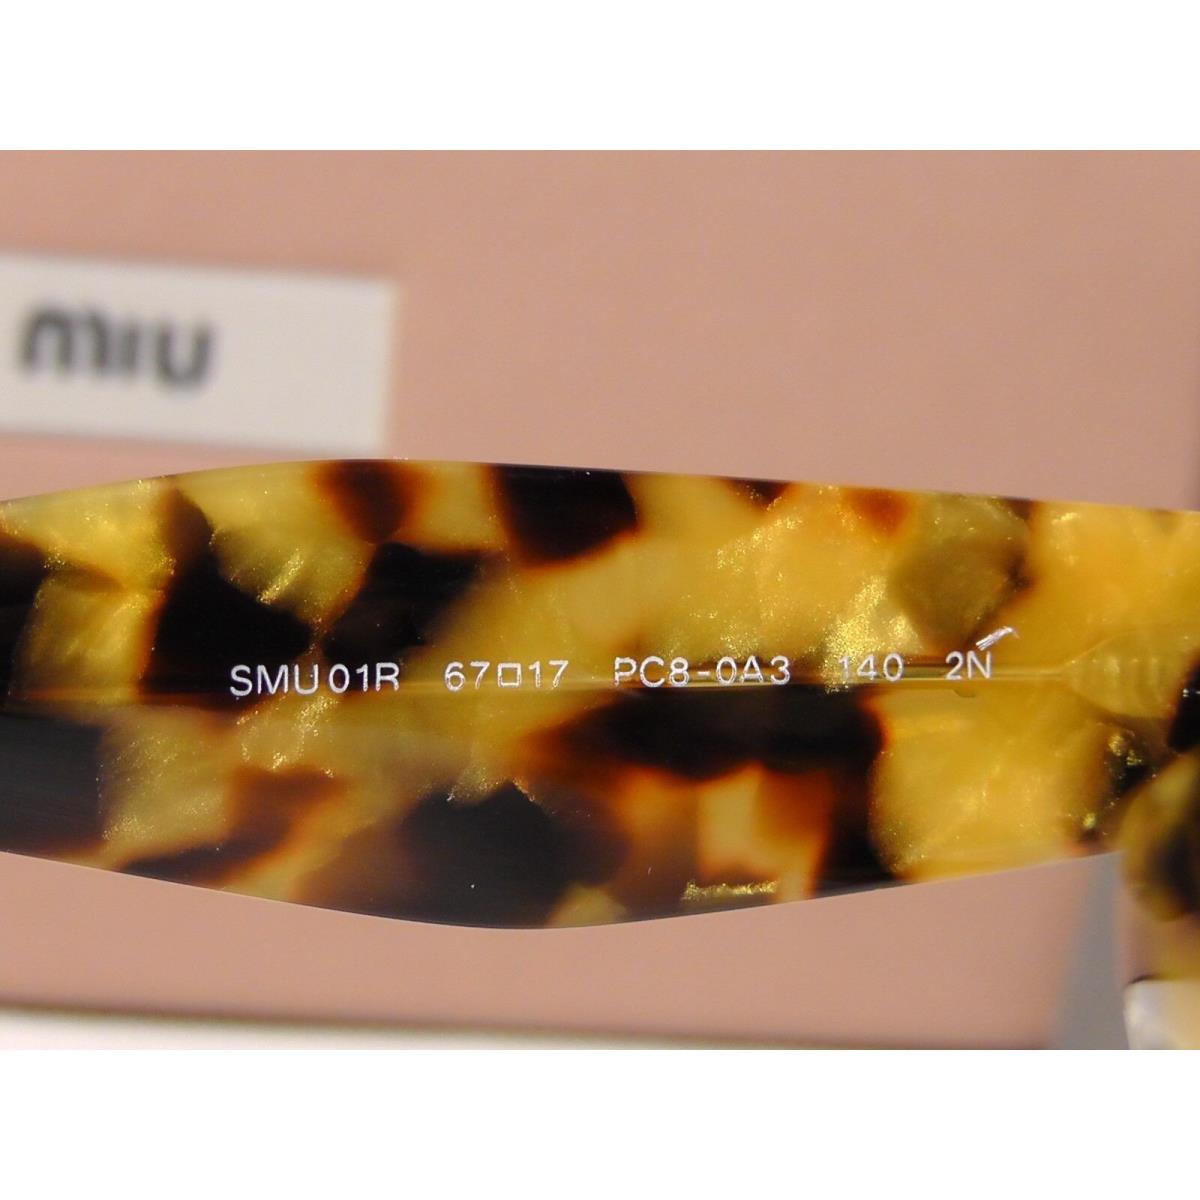 Miu Miu sunglasses  - Light Havana Frame, Gray / Yellow Lens 5